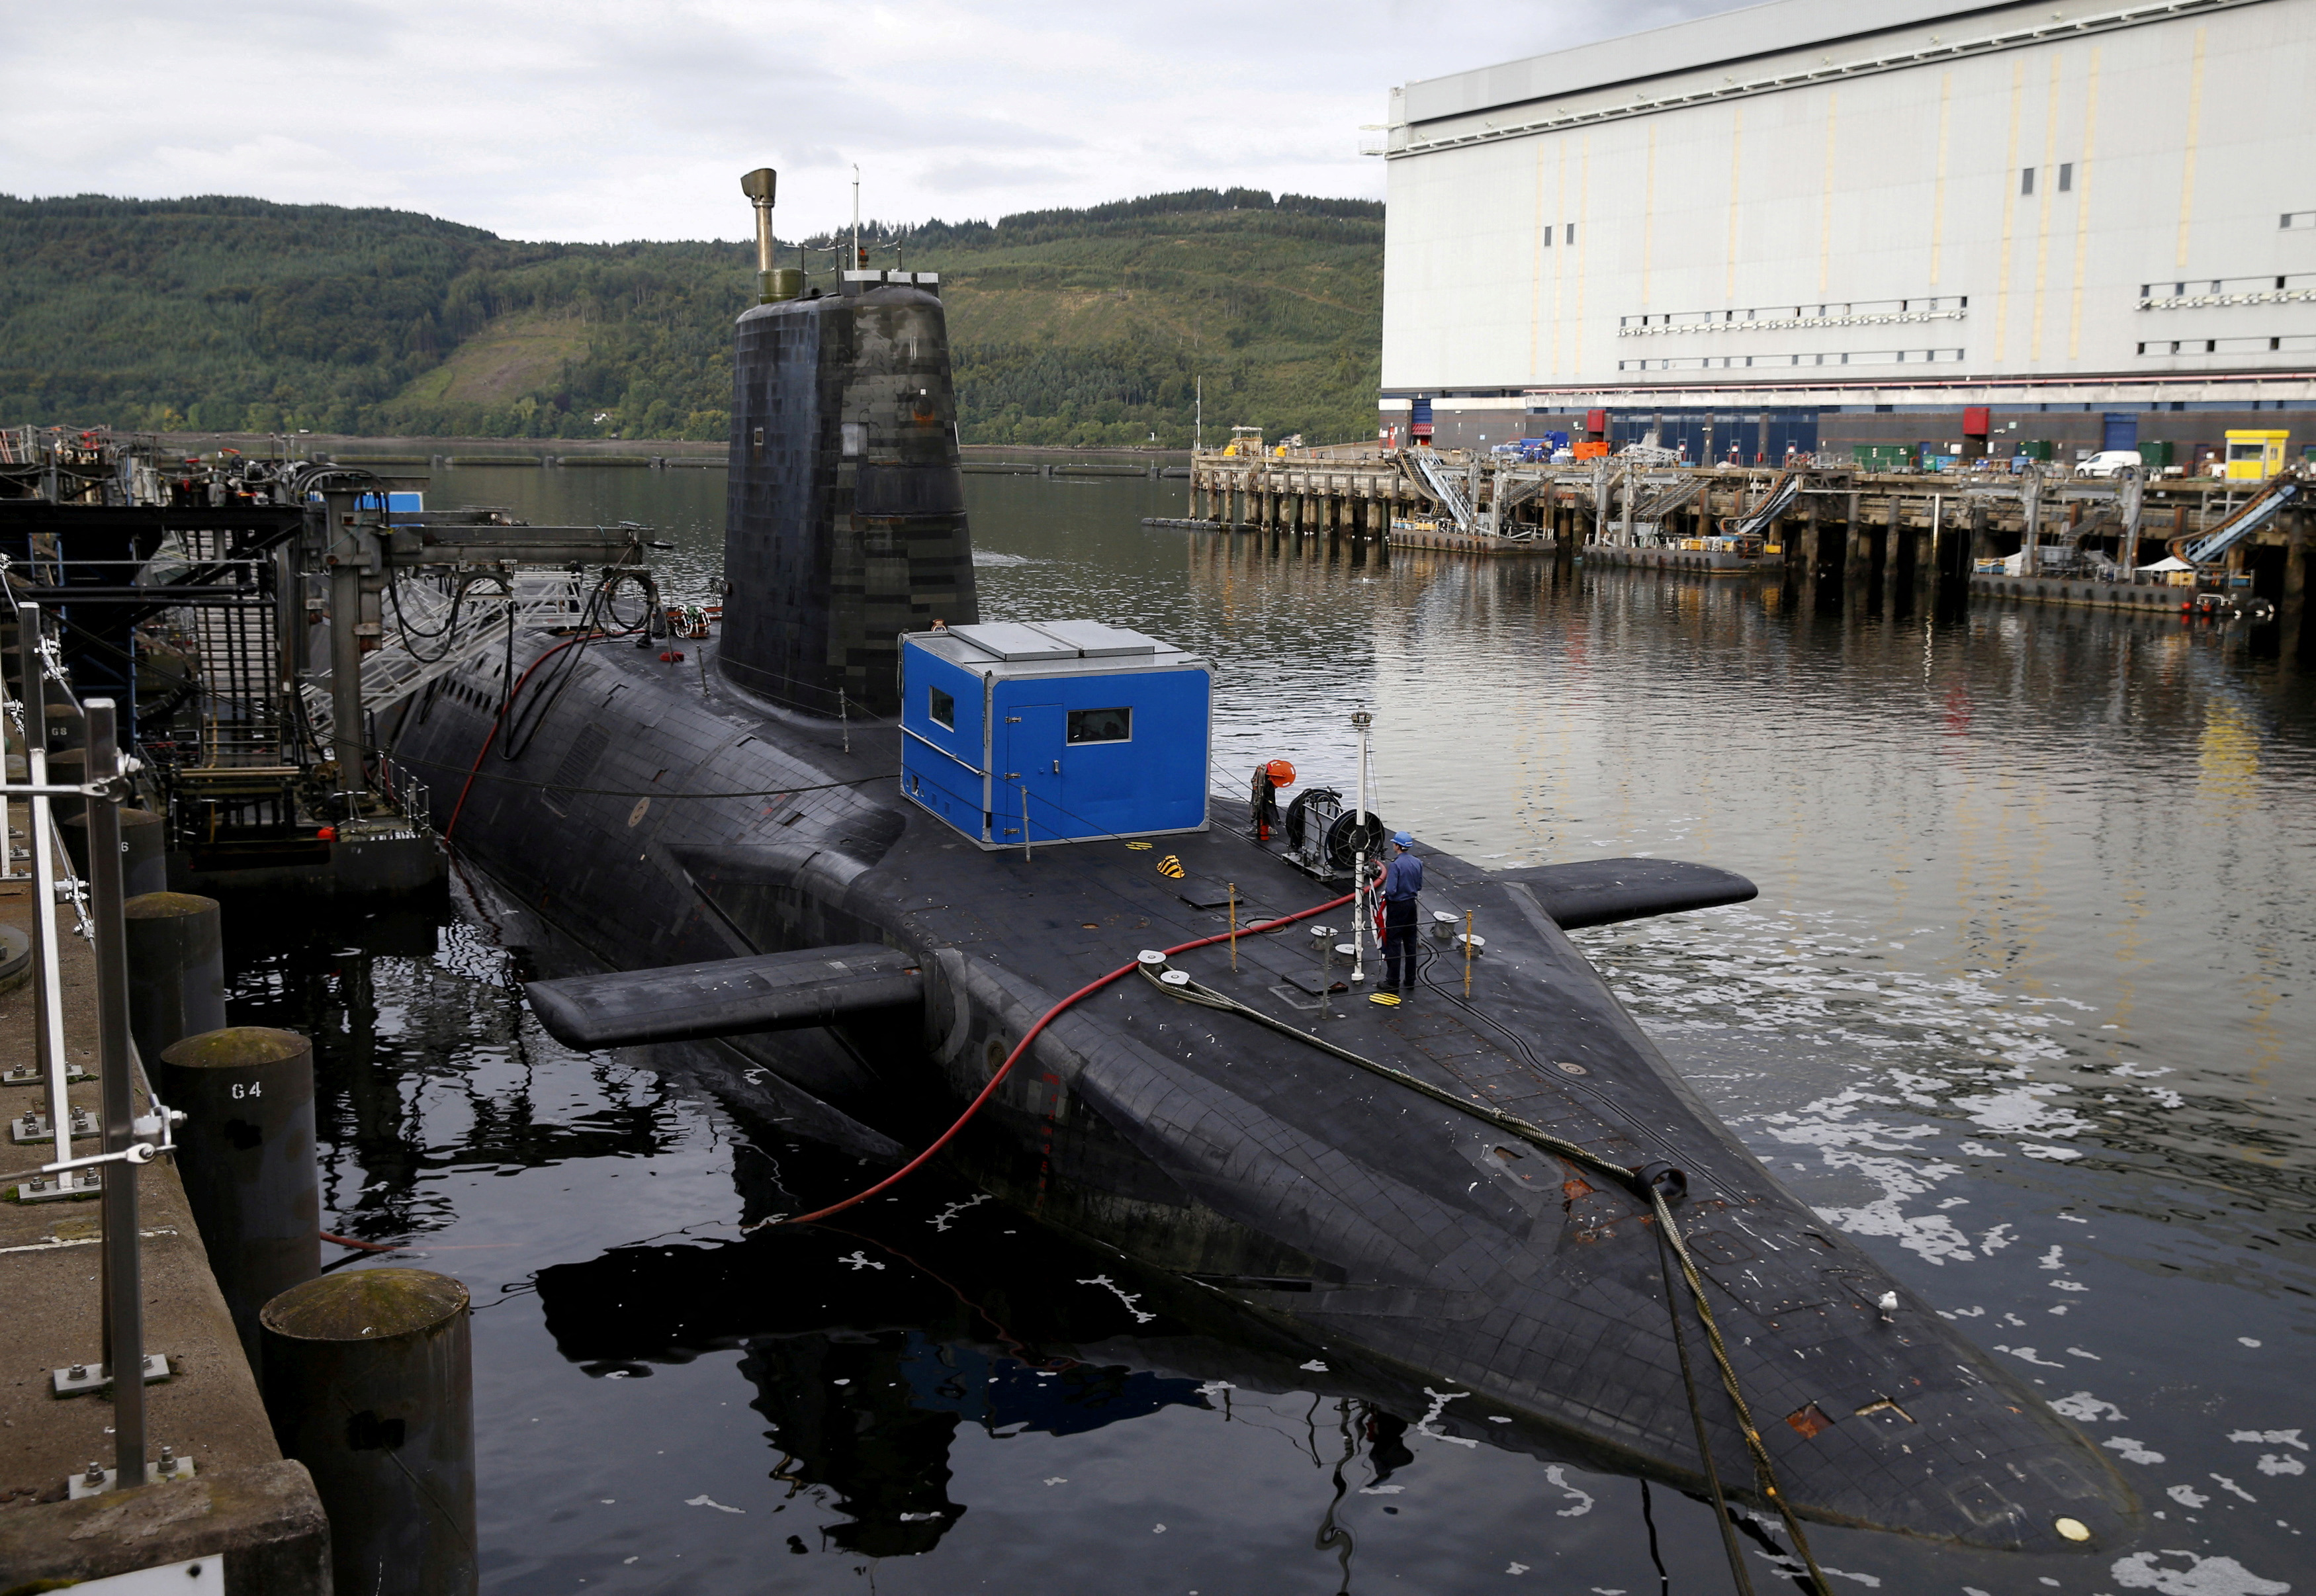 A nuclear submarine is seen at the Royal Navy's submarine base at Faslane, Scotland